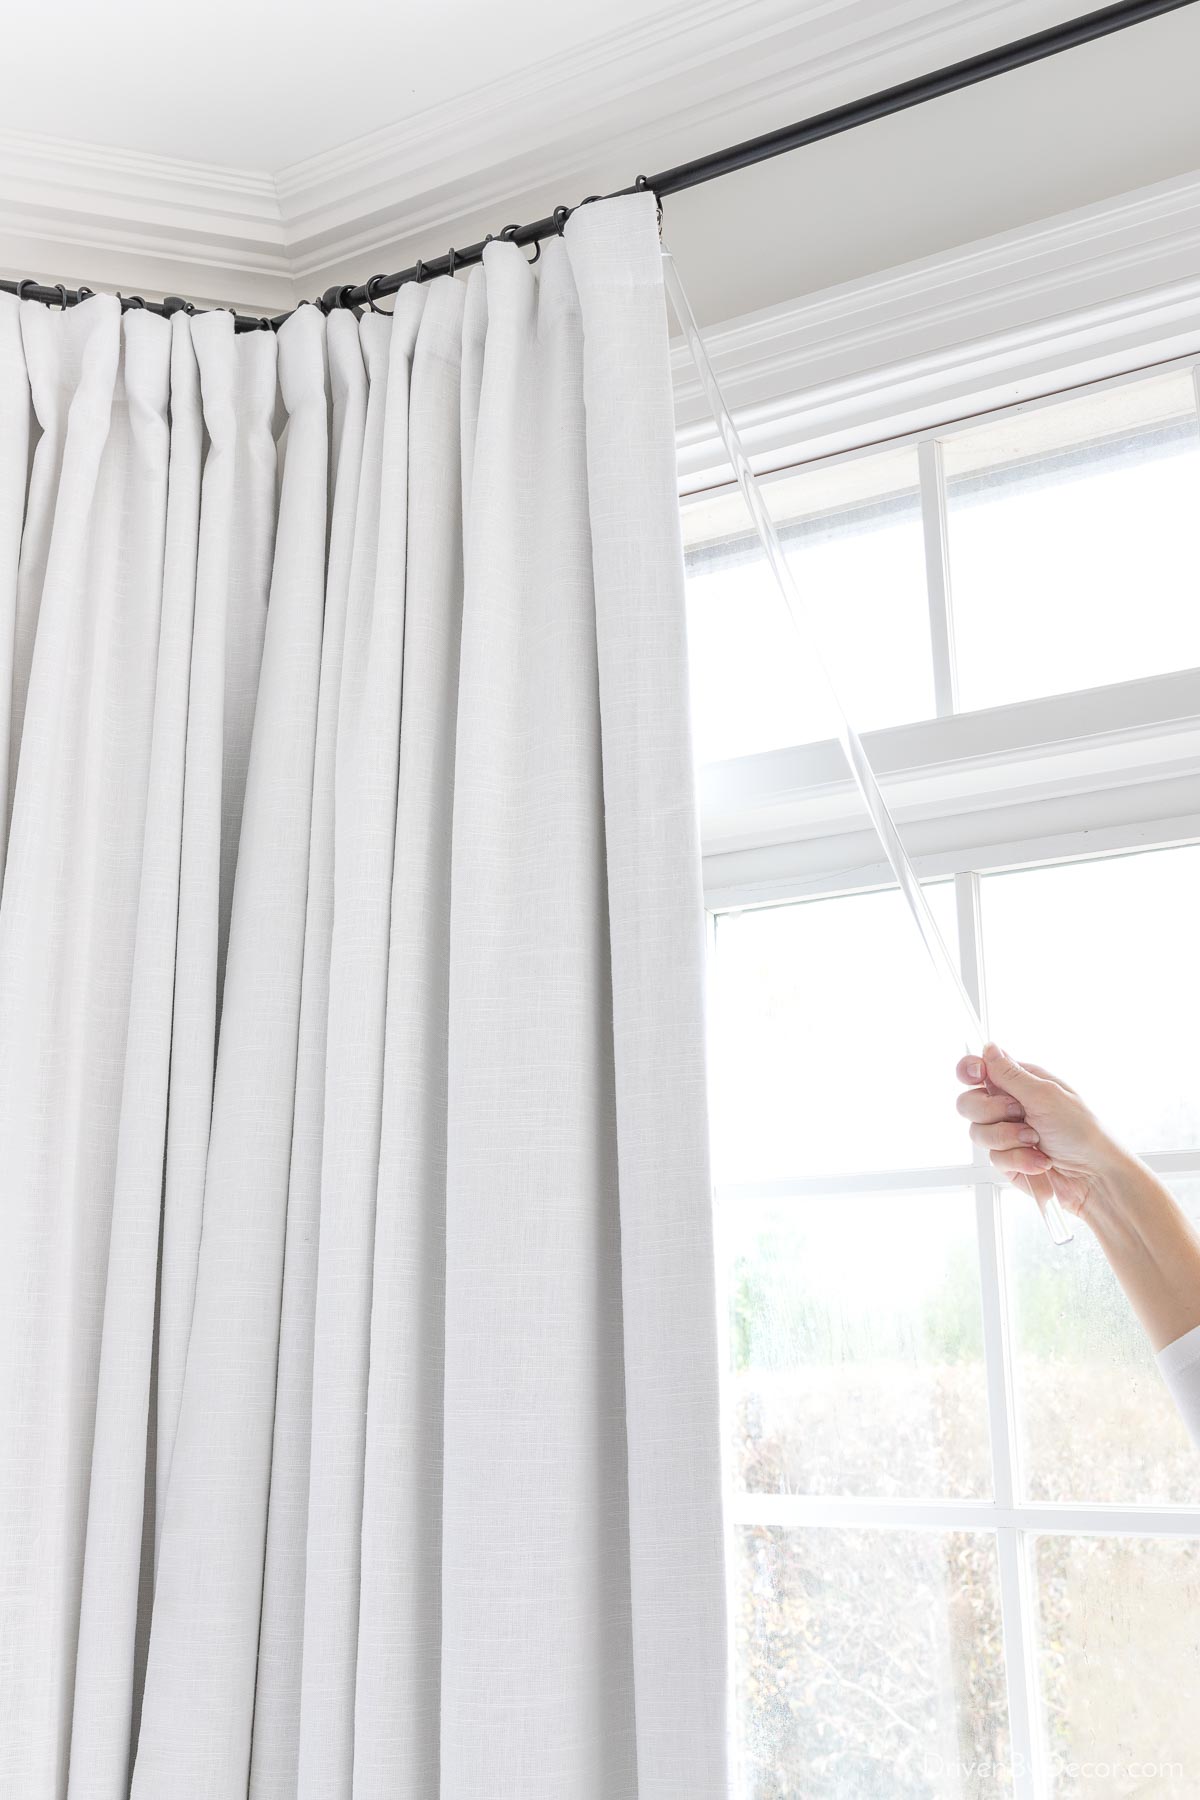 Closing drapes with an acrylic curtain wand